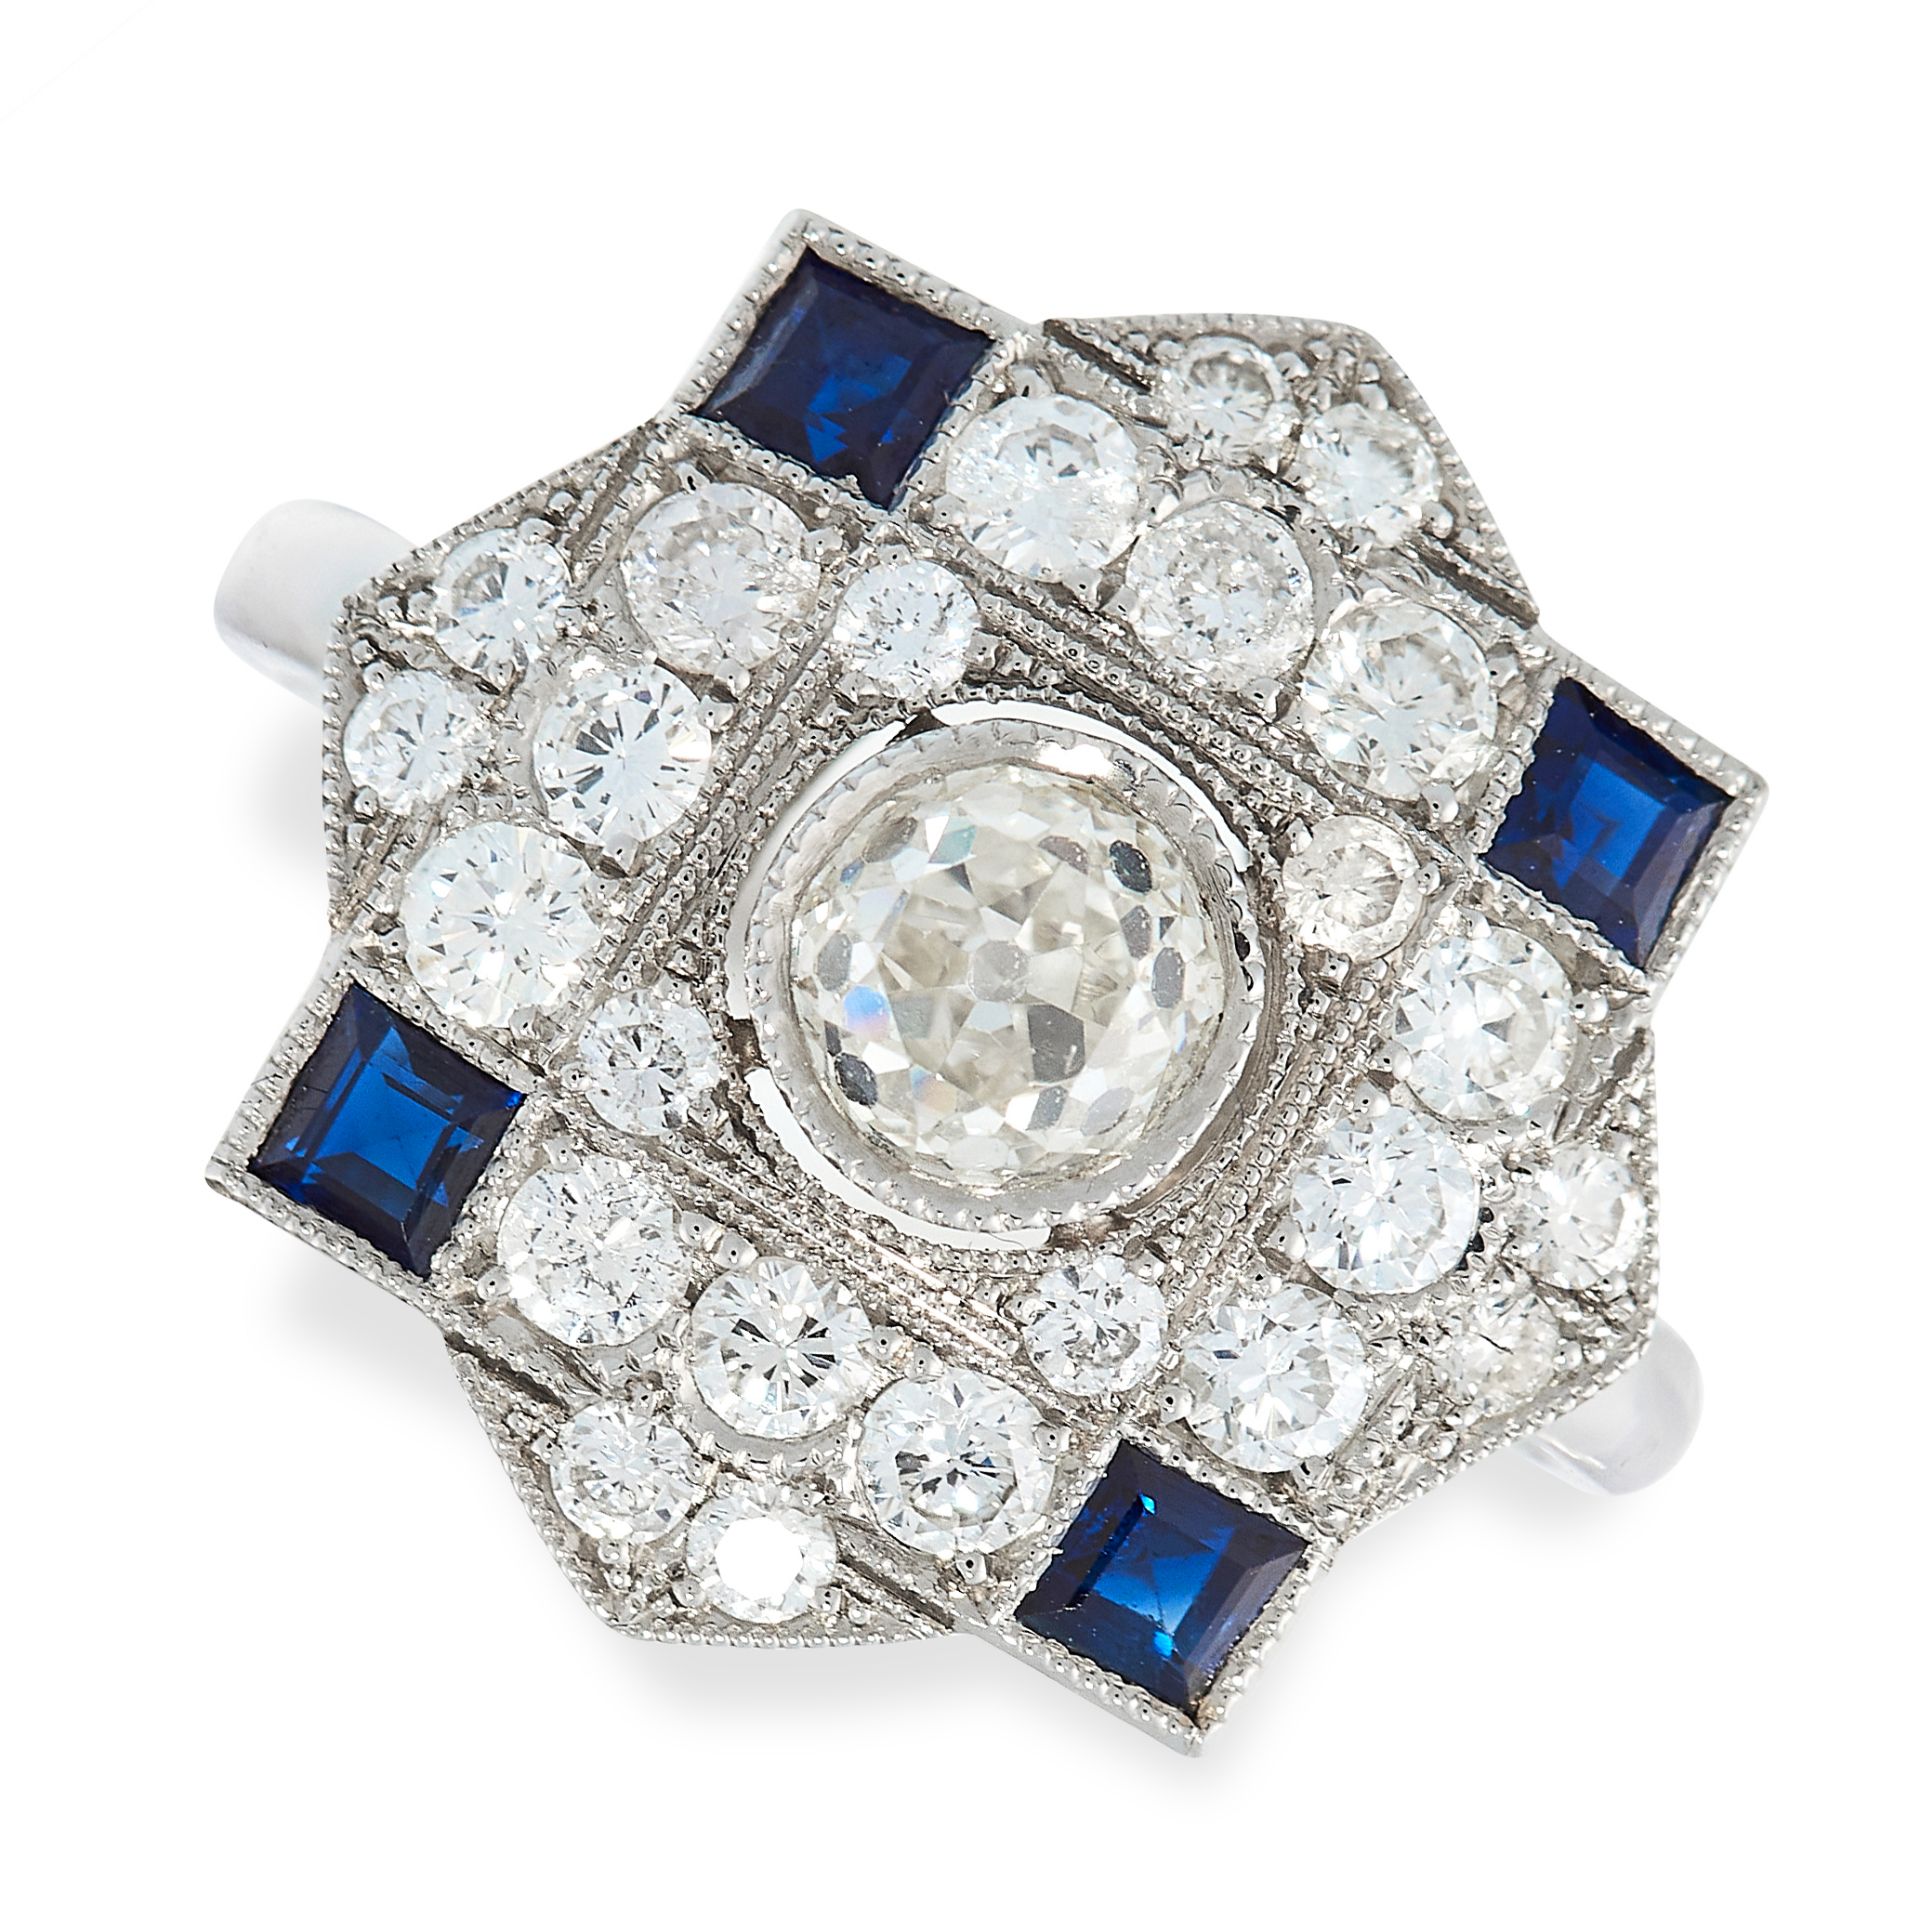 SAPPHIRE AND DIAMOND RING in platinum, in Art Deco design, the square face featuring a quatrefoil